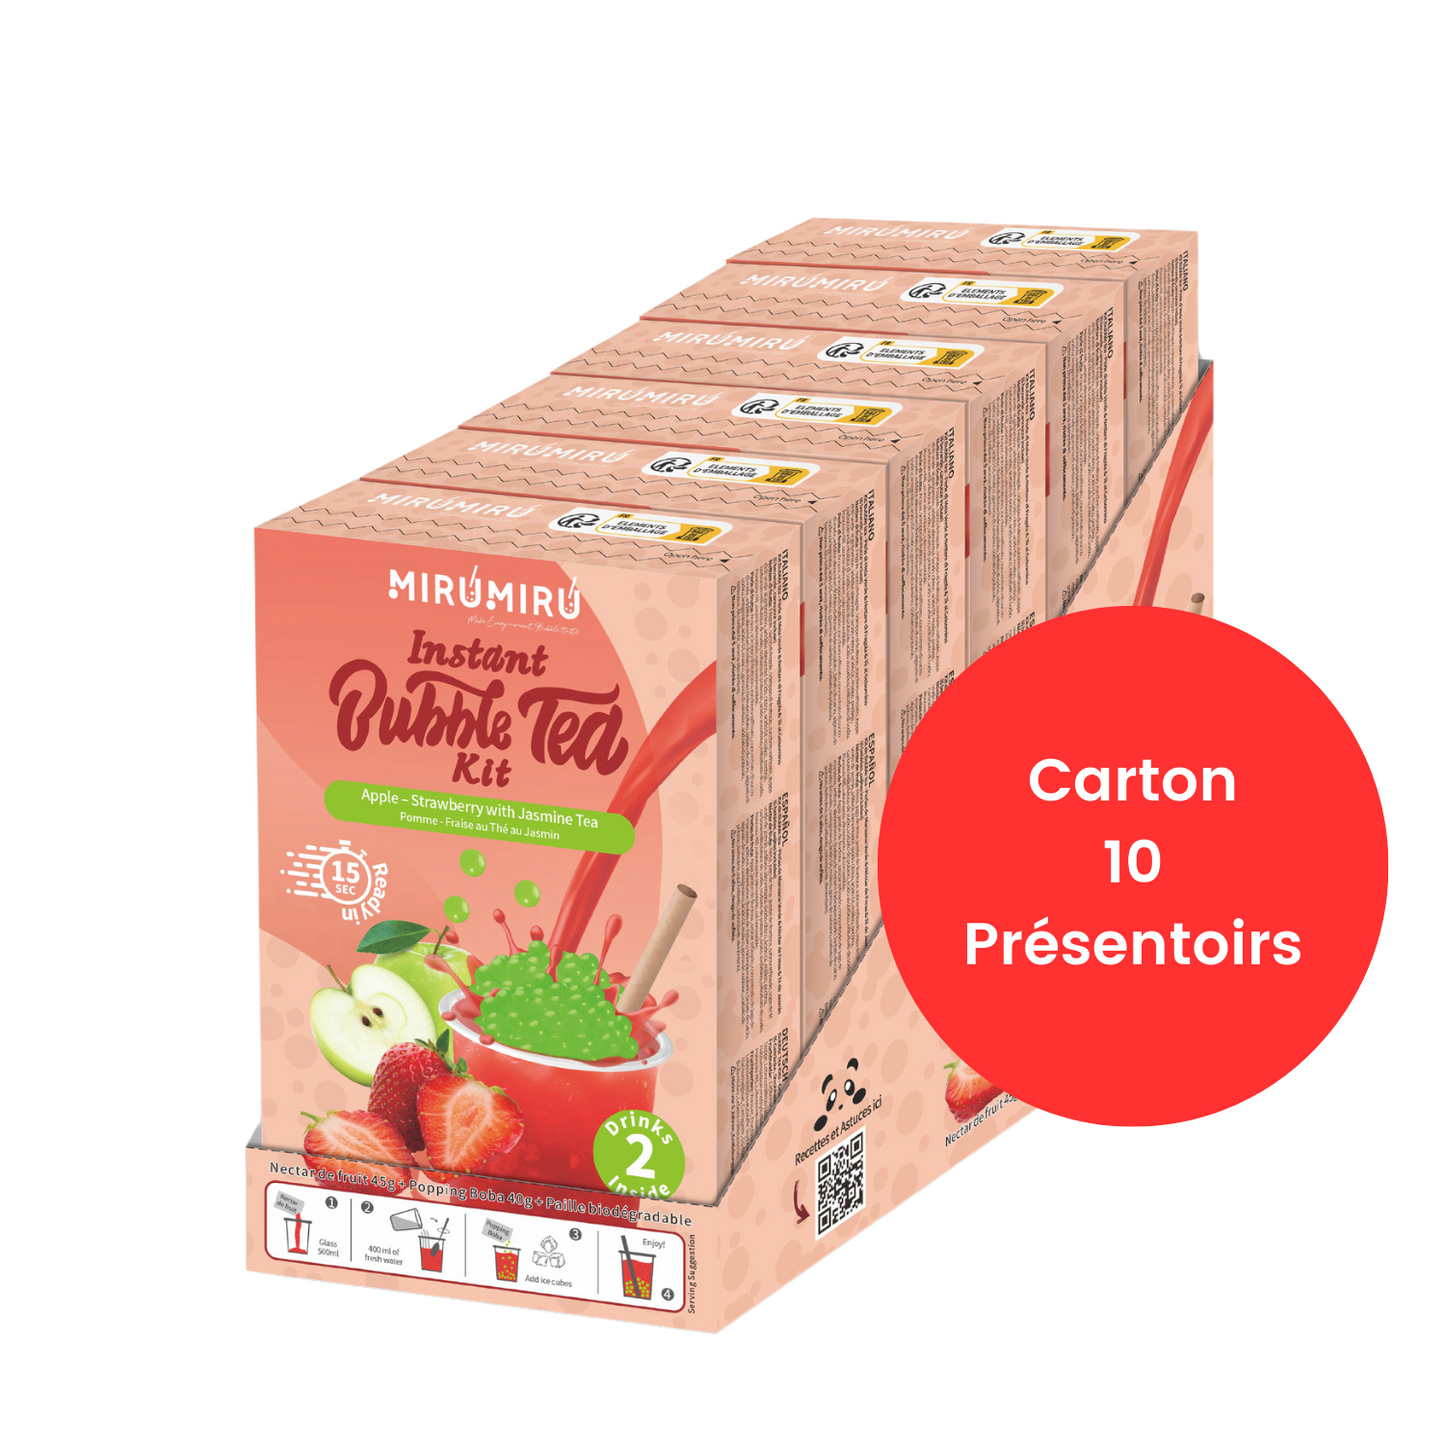 Bubble Tea Kits - Green Apple & Strawberry & Jasmine Tea - 24 kits of 6 drinks